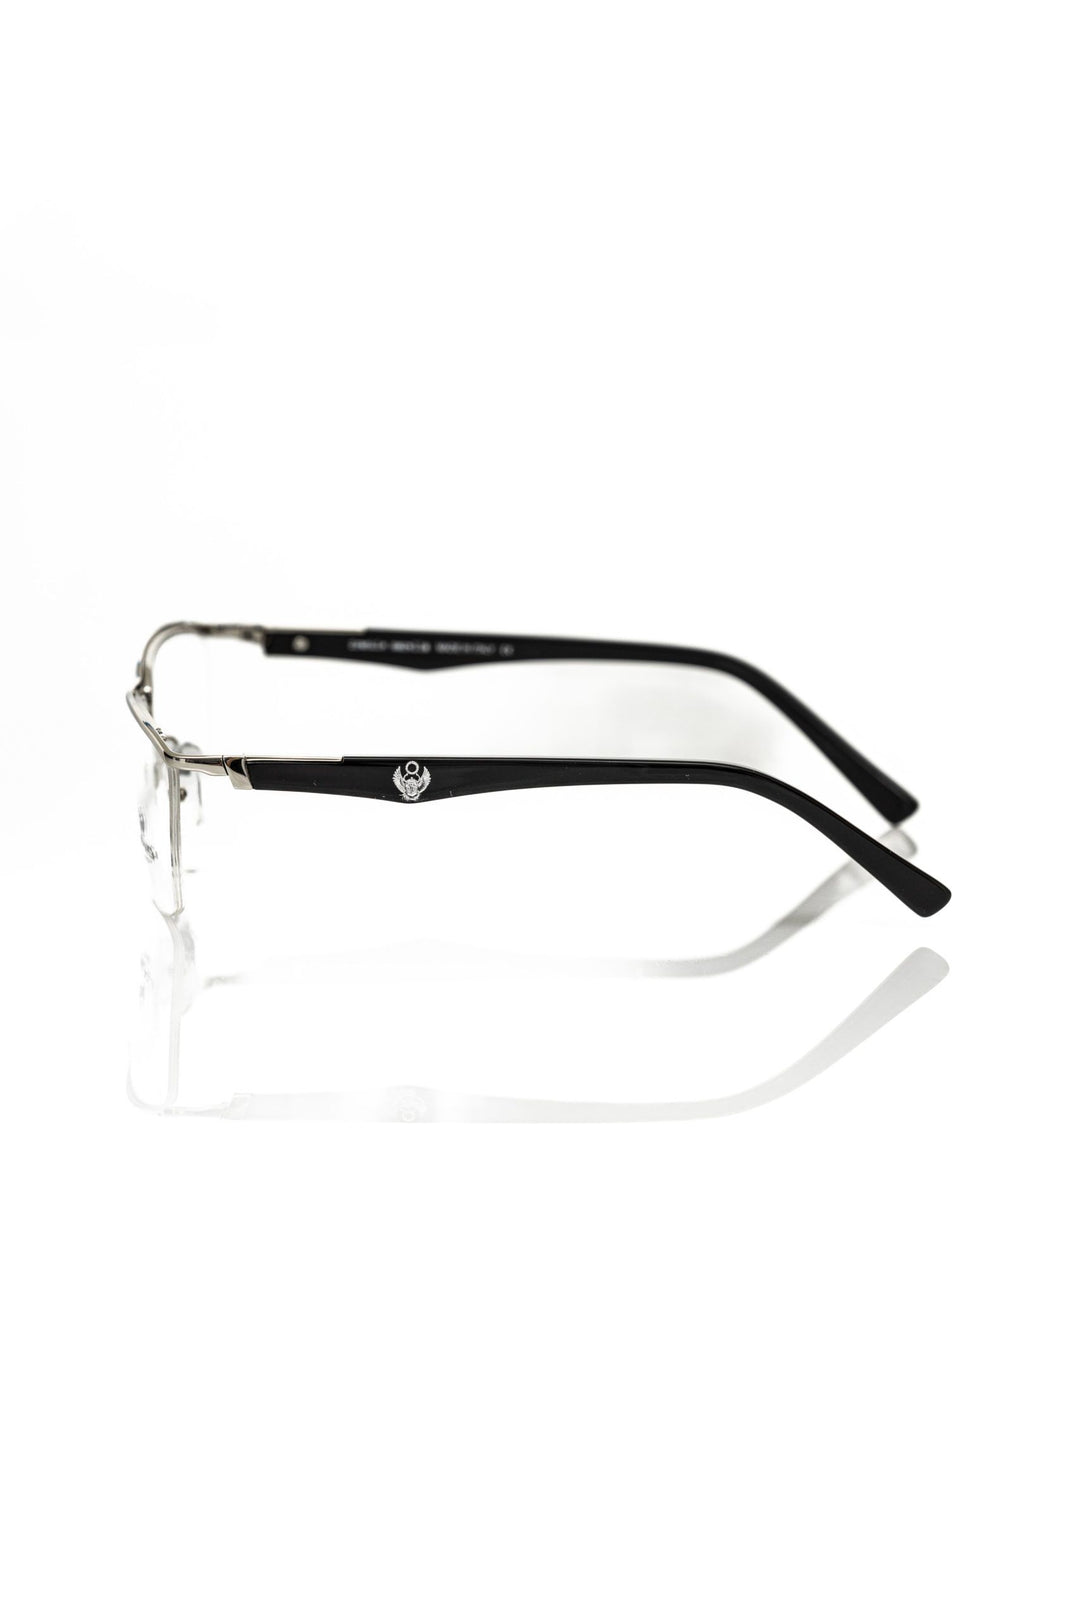 Frankie Morello Elegant Black Clubmaster Eyeglasses